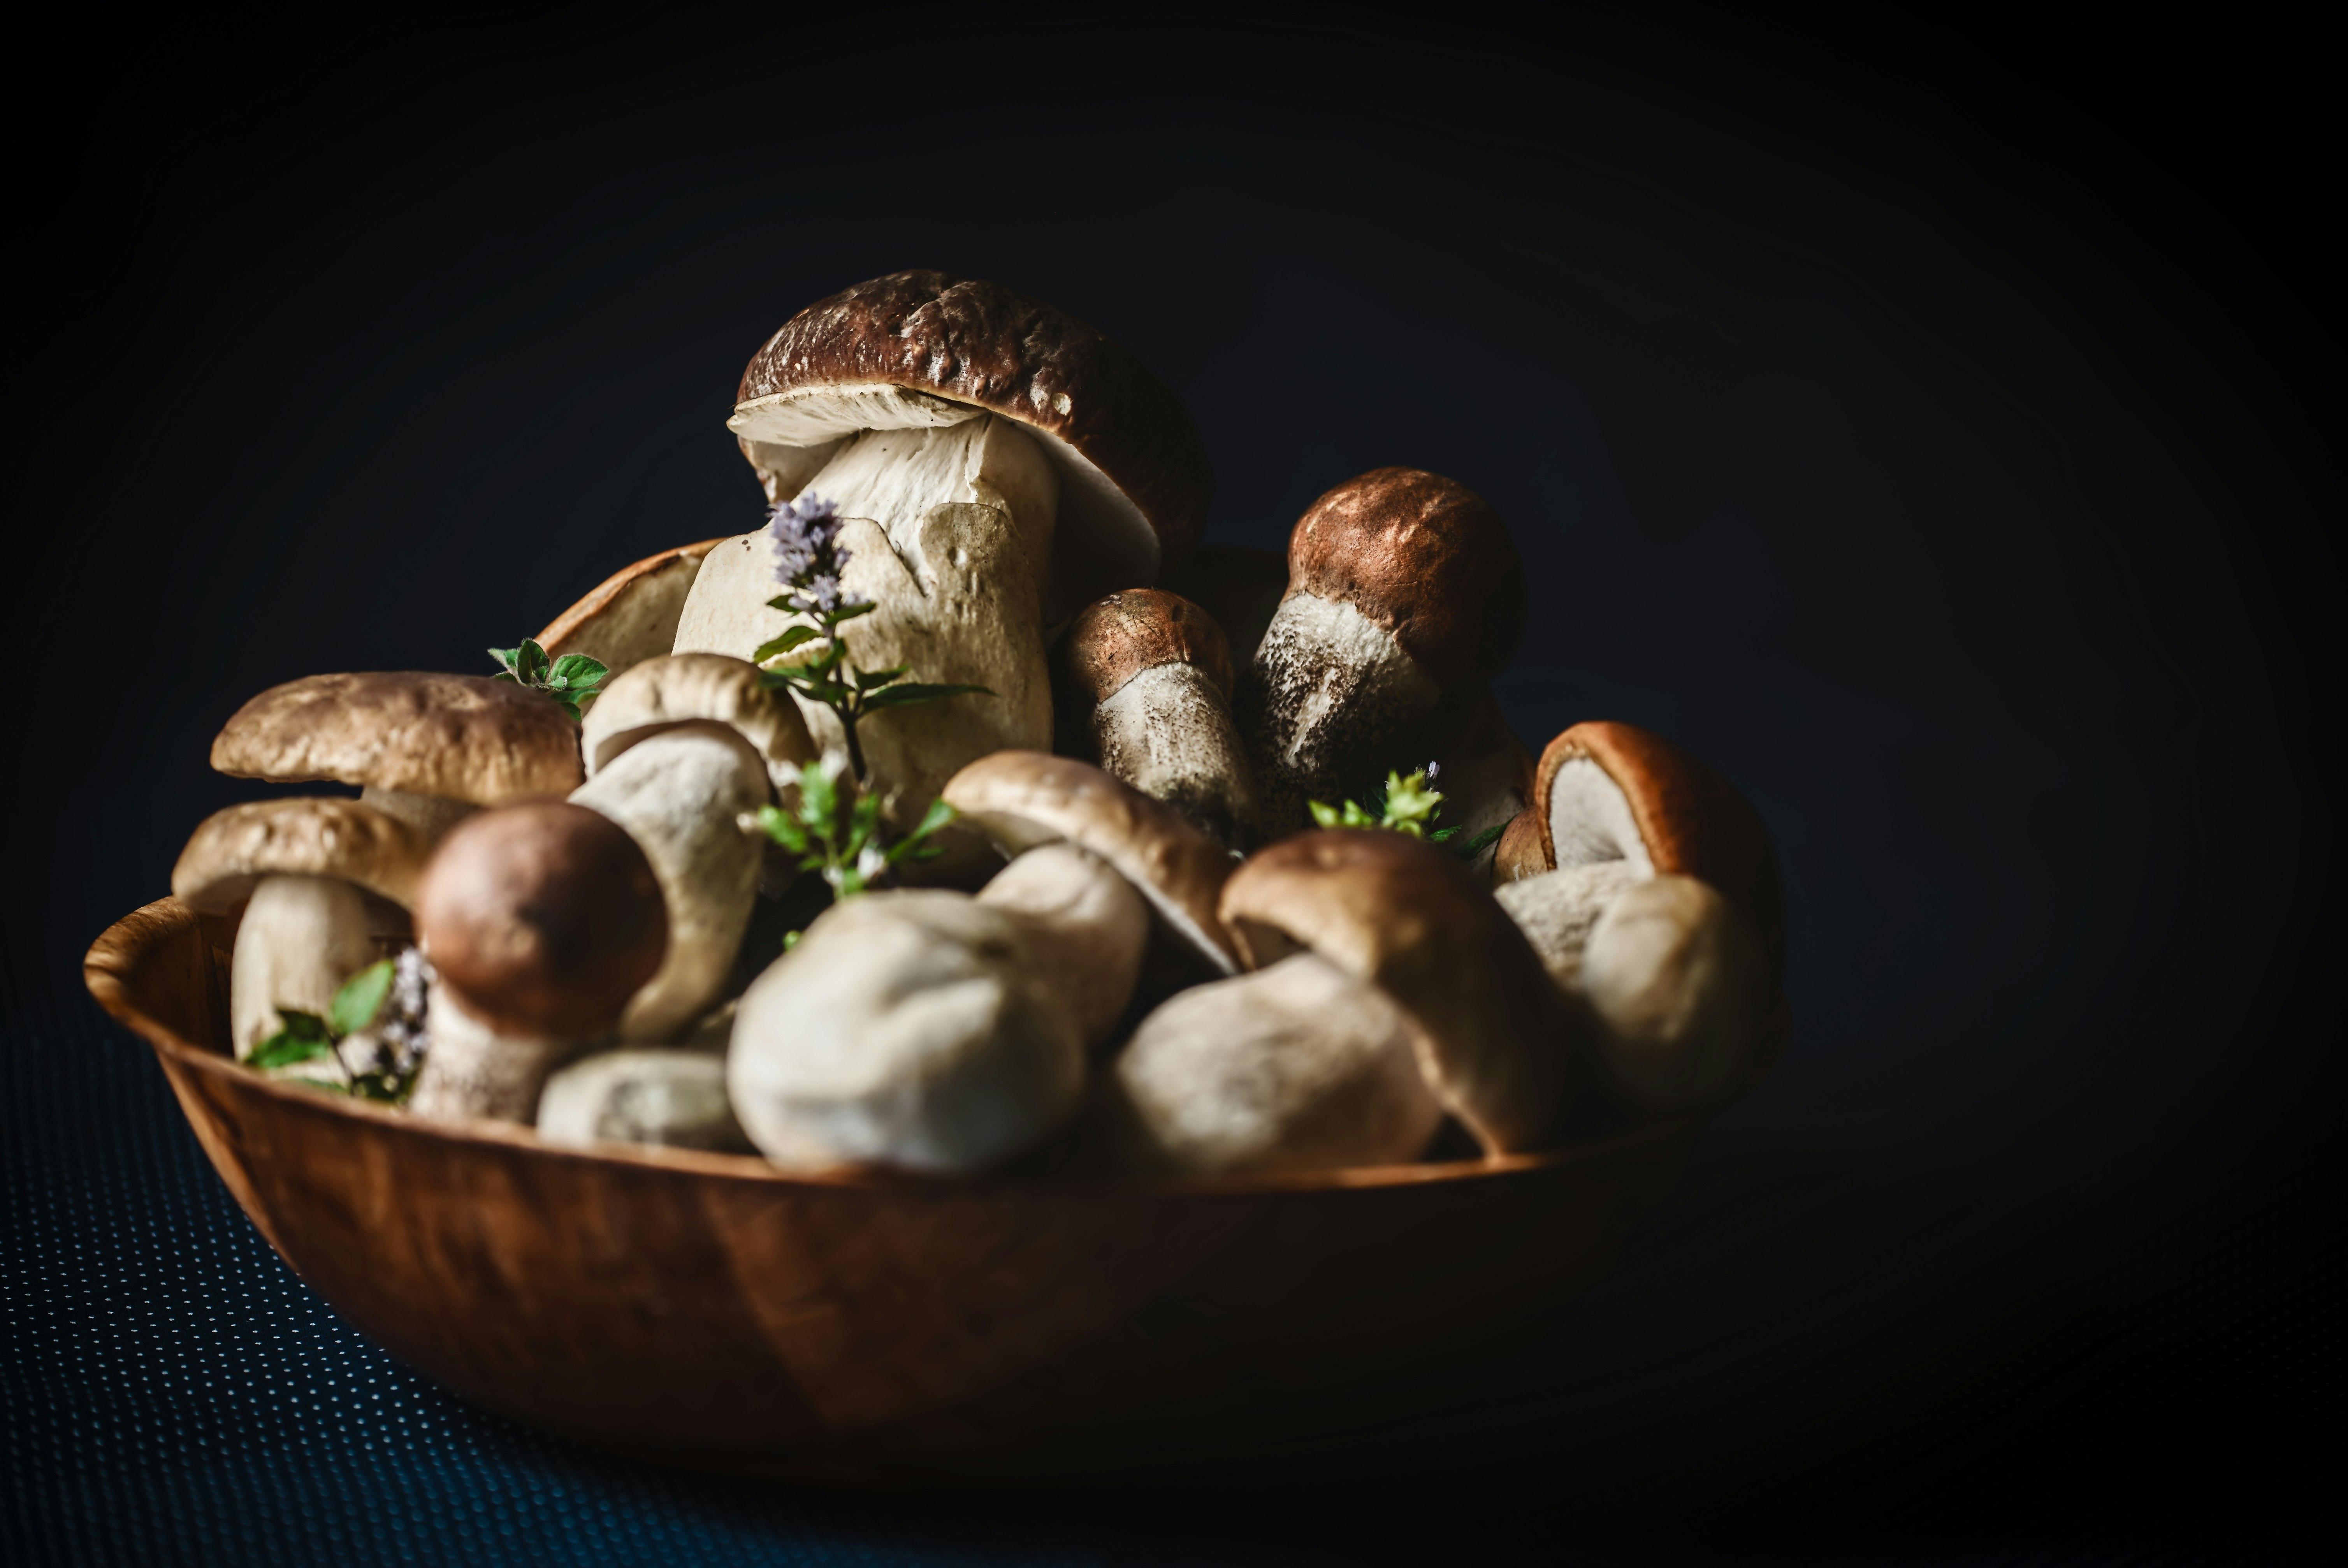 mushroom inside bowl with dim background